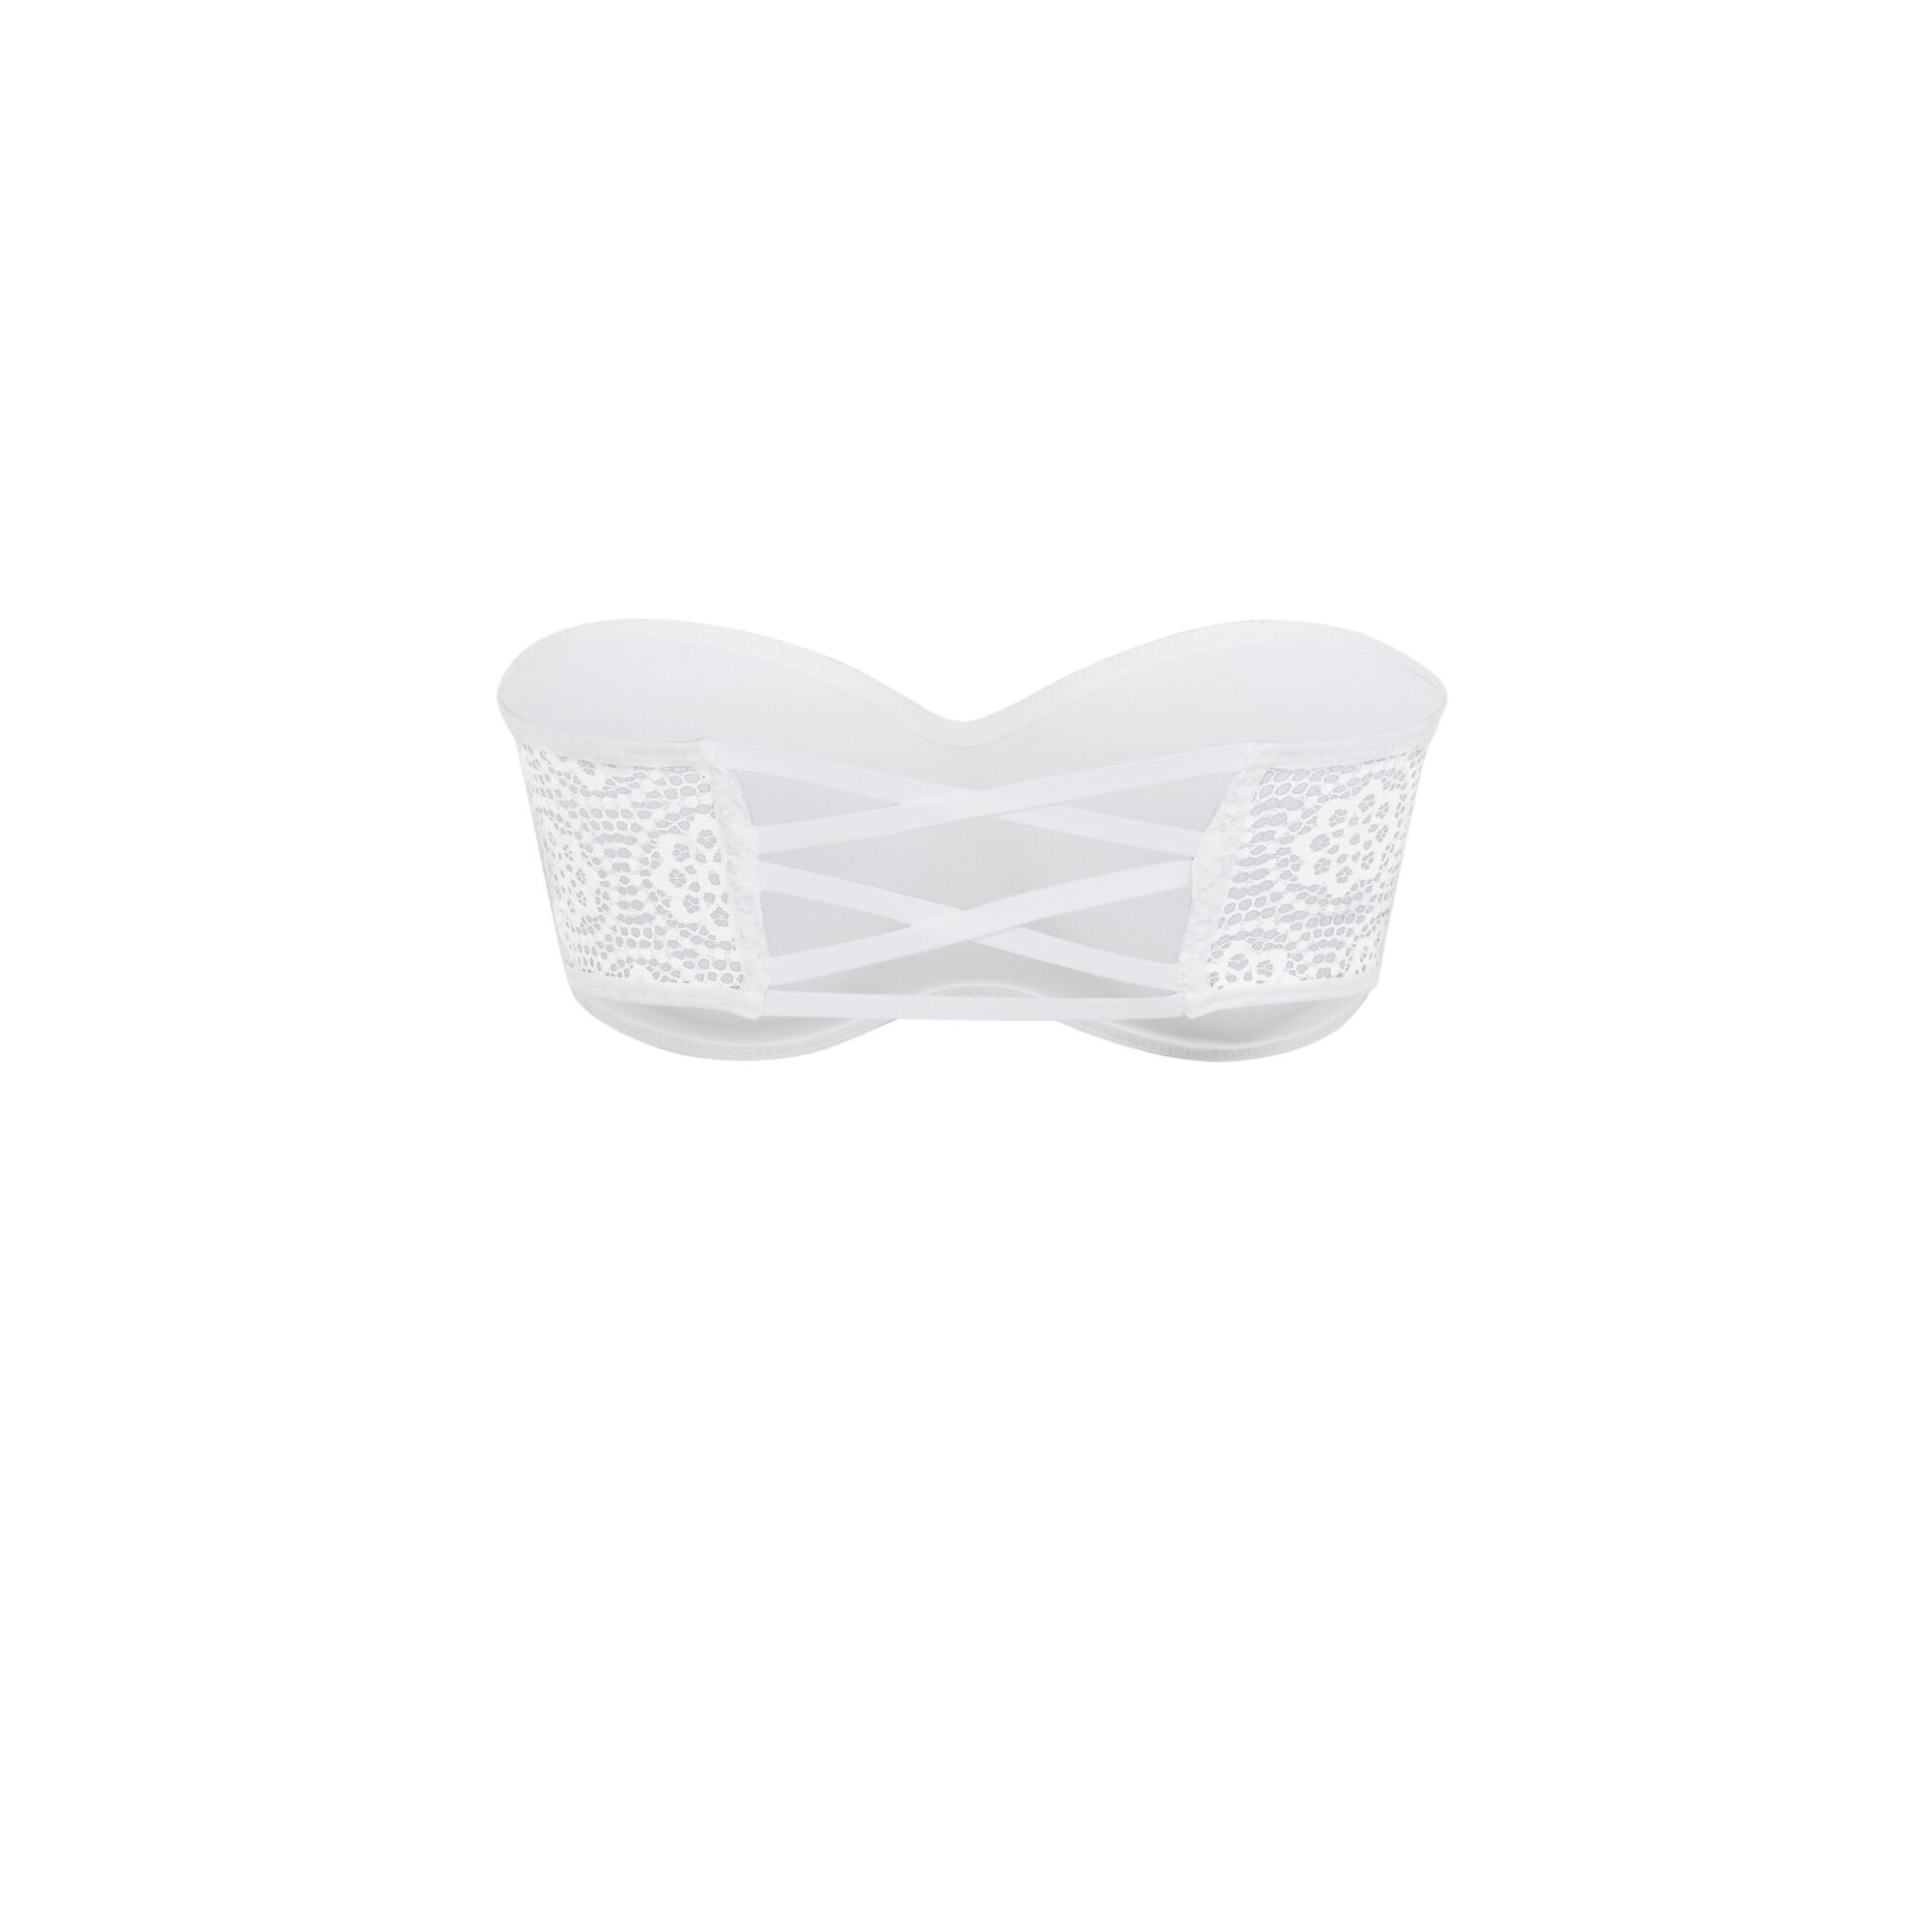 Lace bandeau bra with ties - white - Undiz